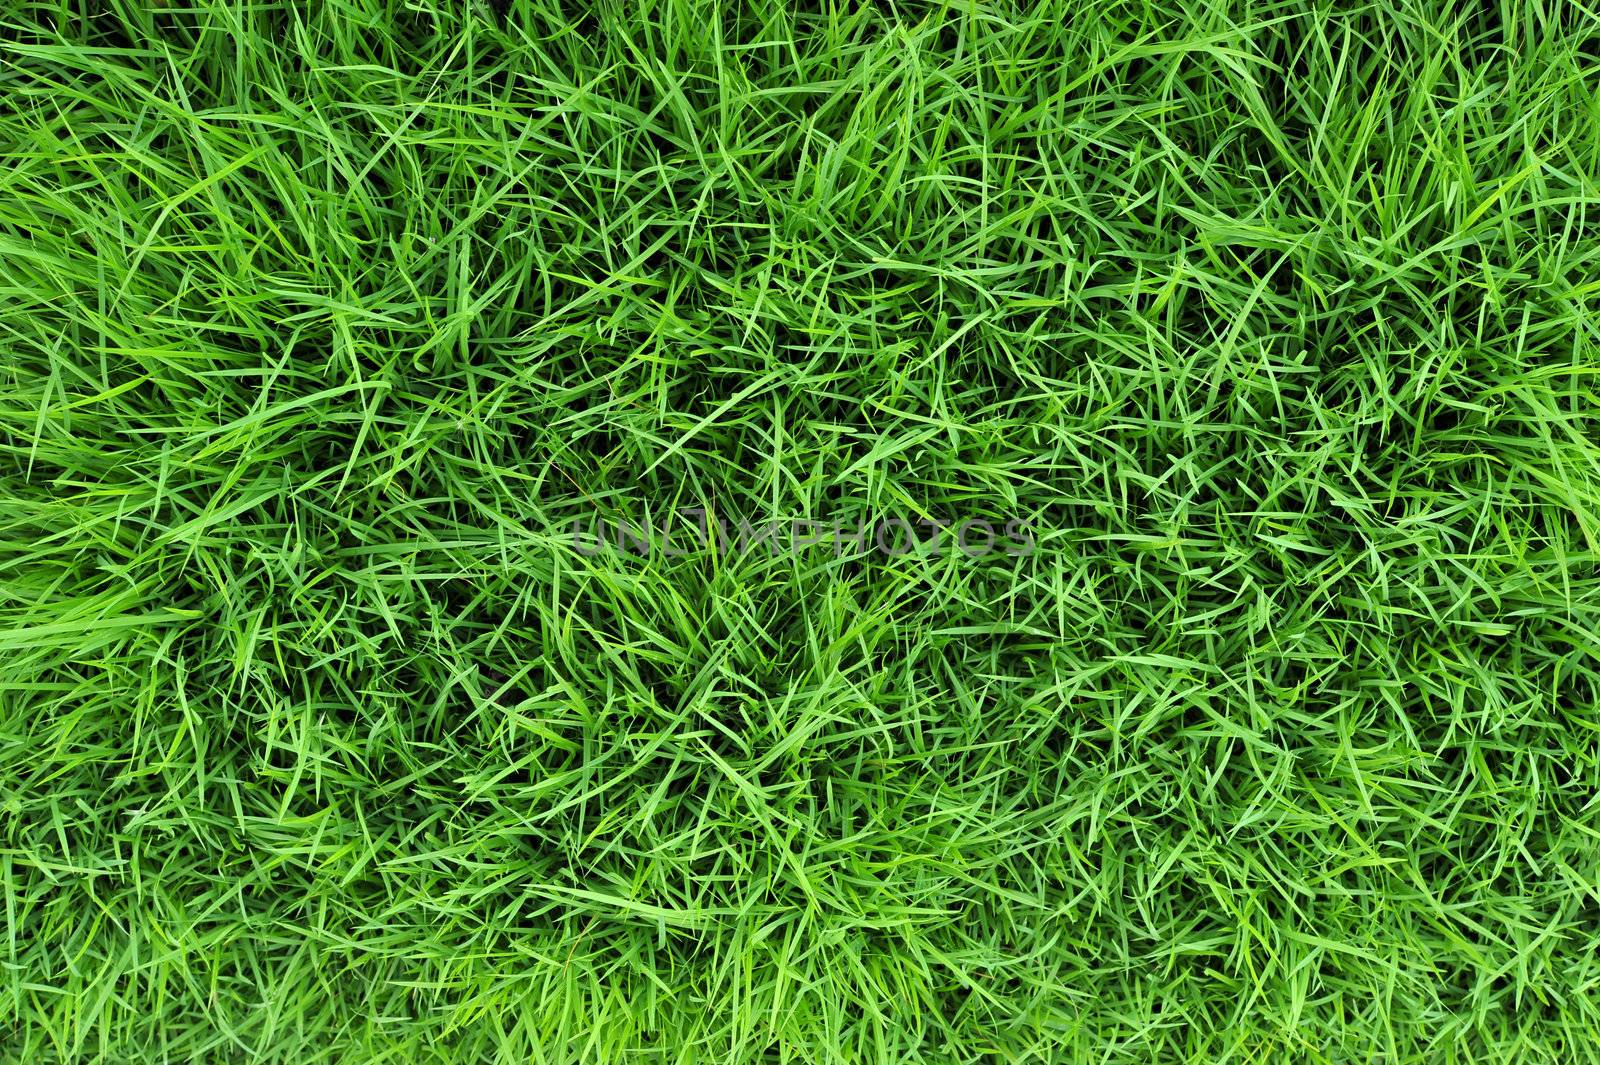 Grass by antpkr